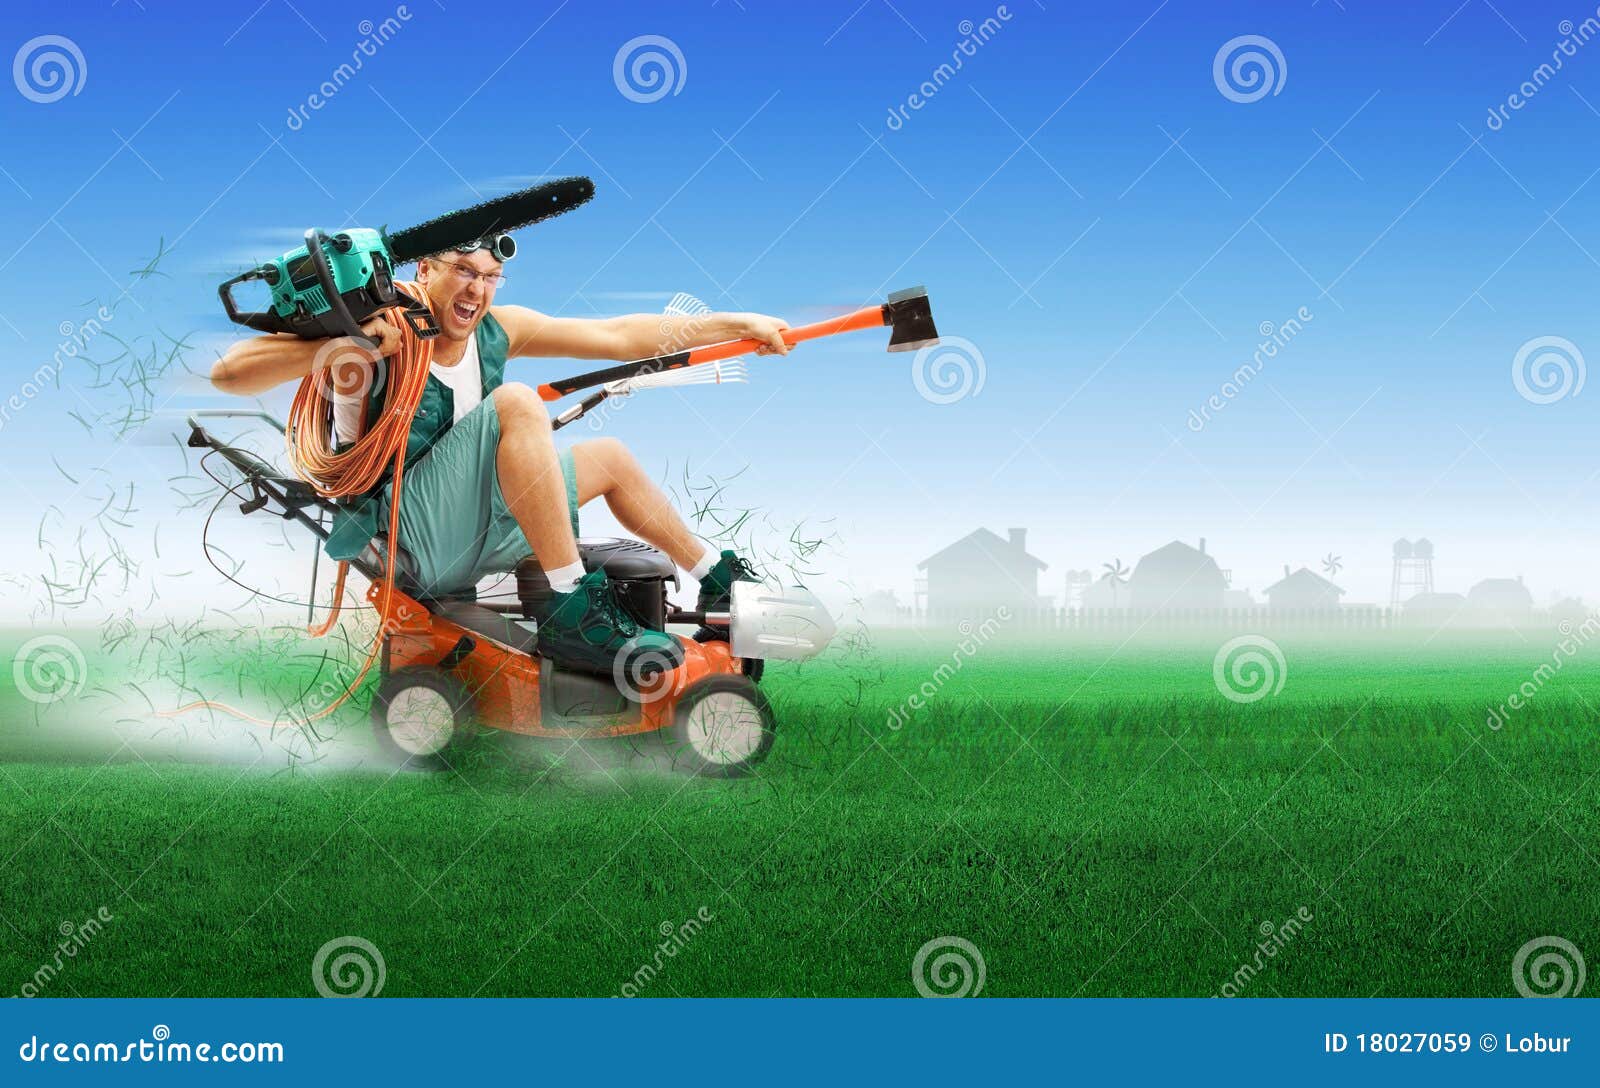 crazy workman driving lawn mower